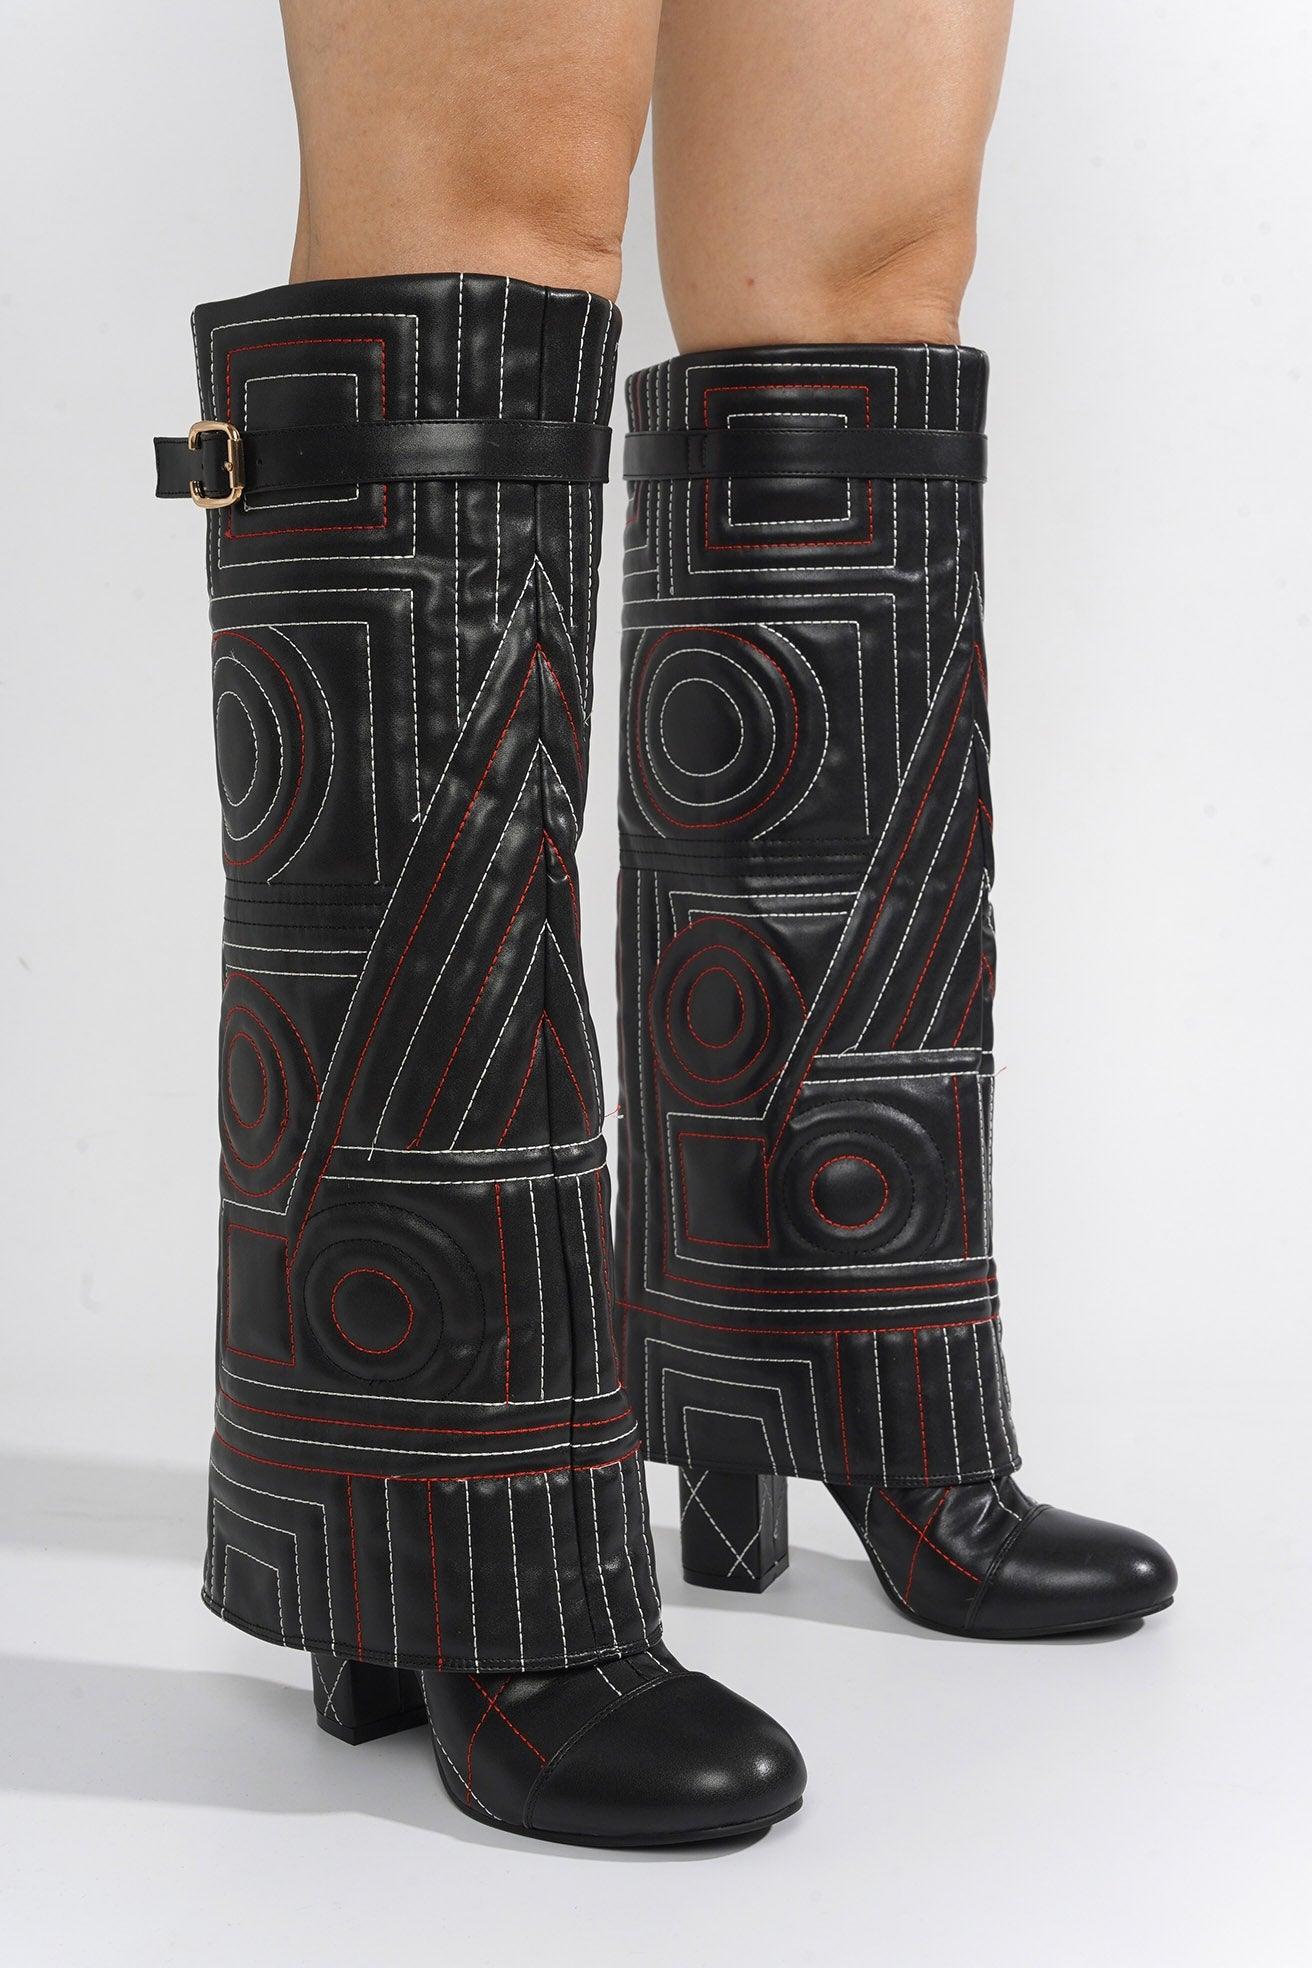 INITIAL - BLACK Thigh High Boots - AMIClubwear